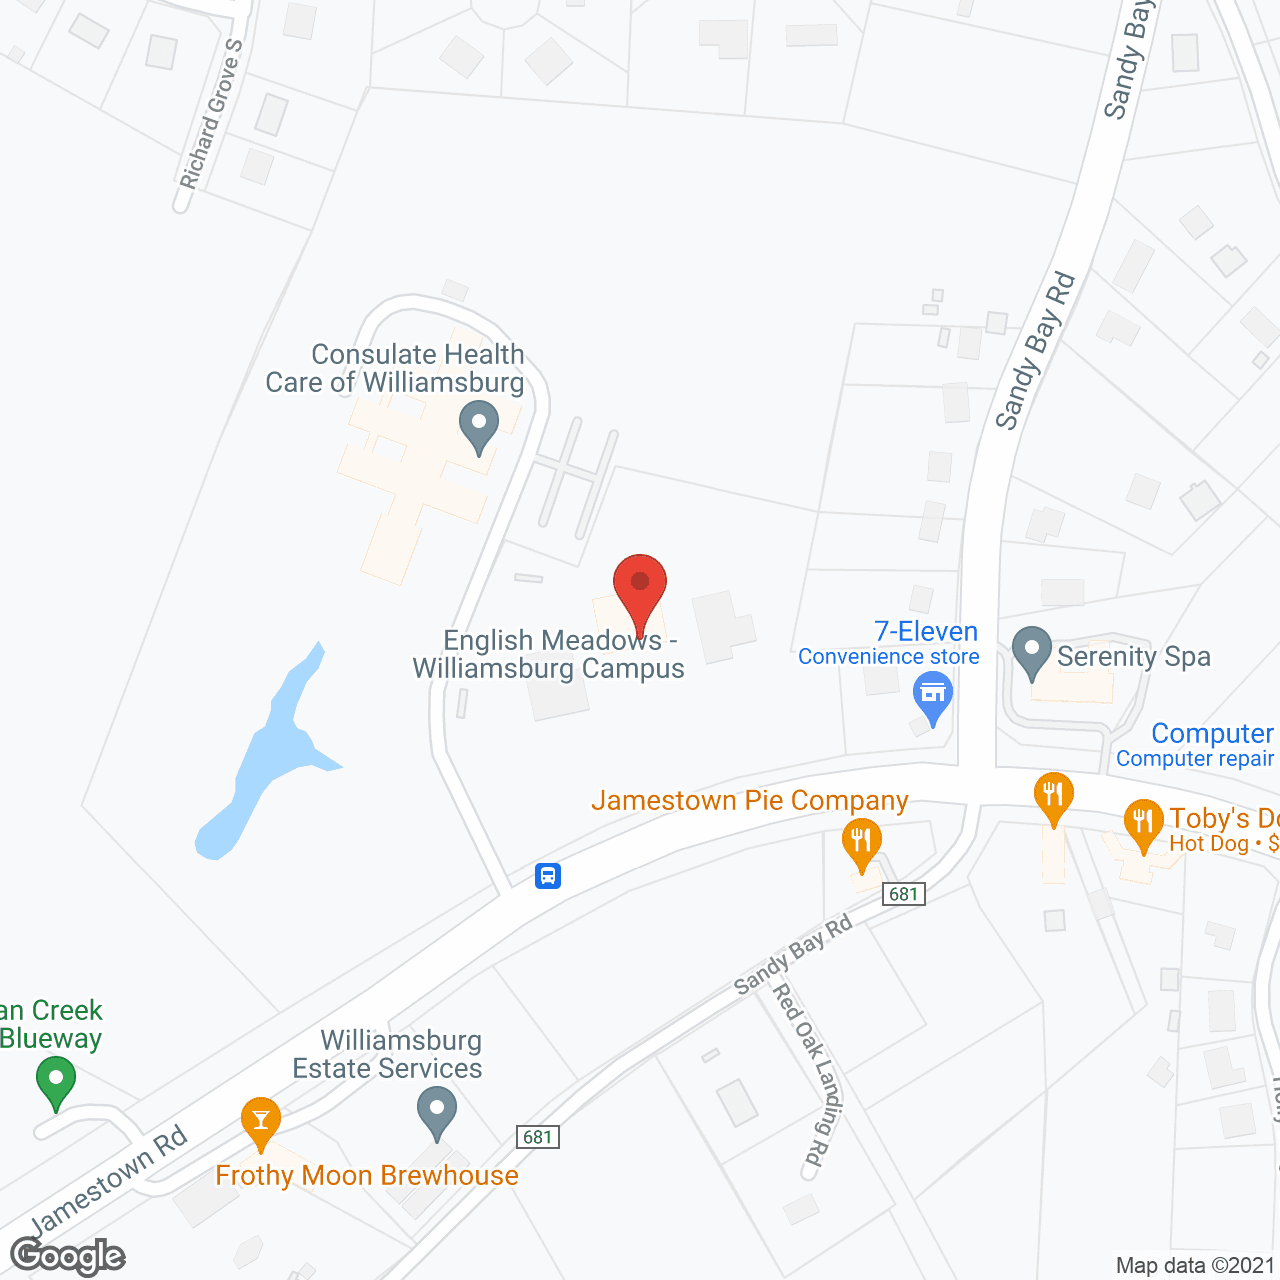 English Meadows Williamsburg Campus in google map